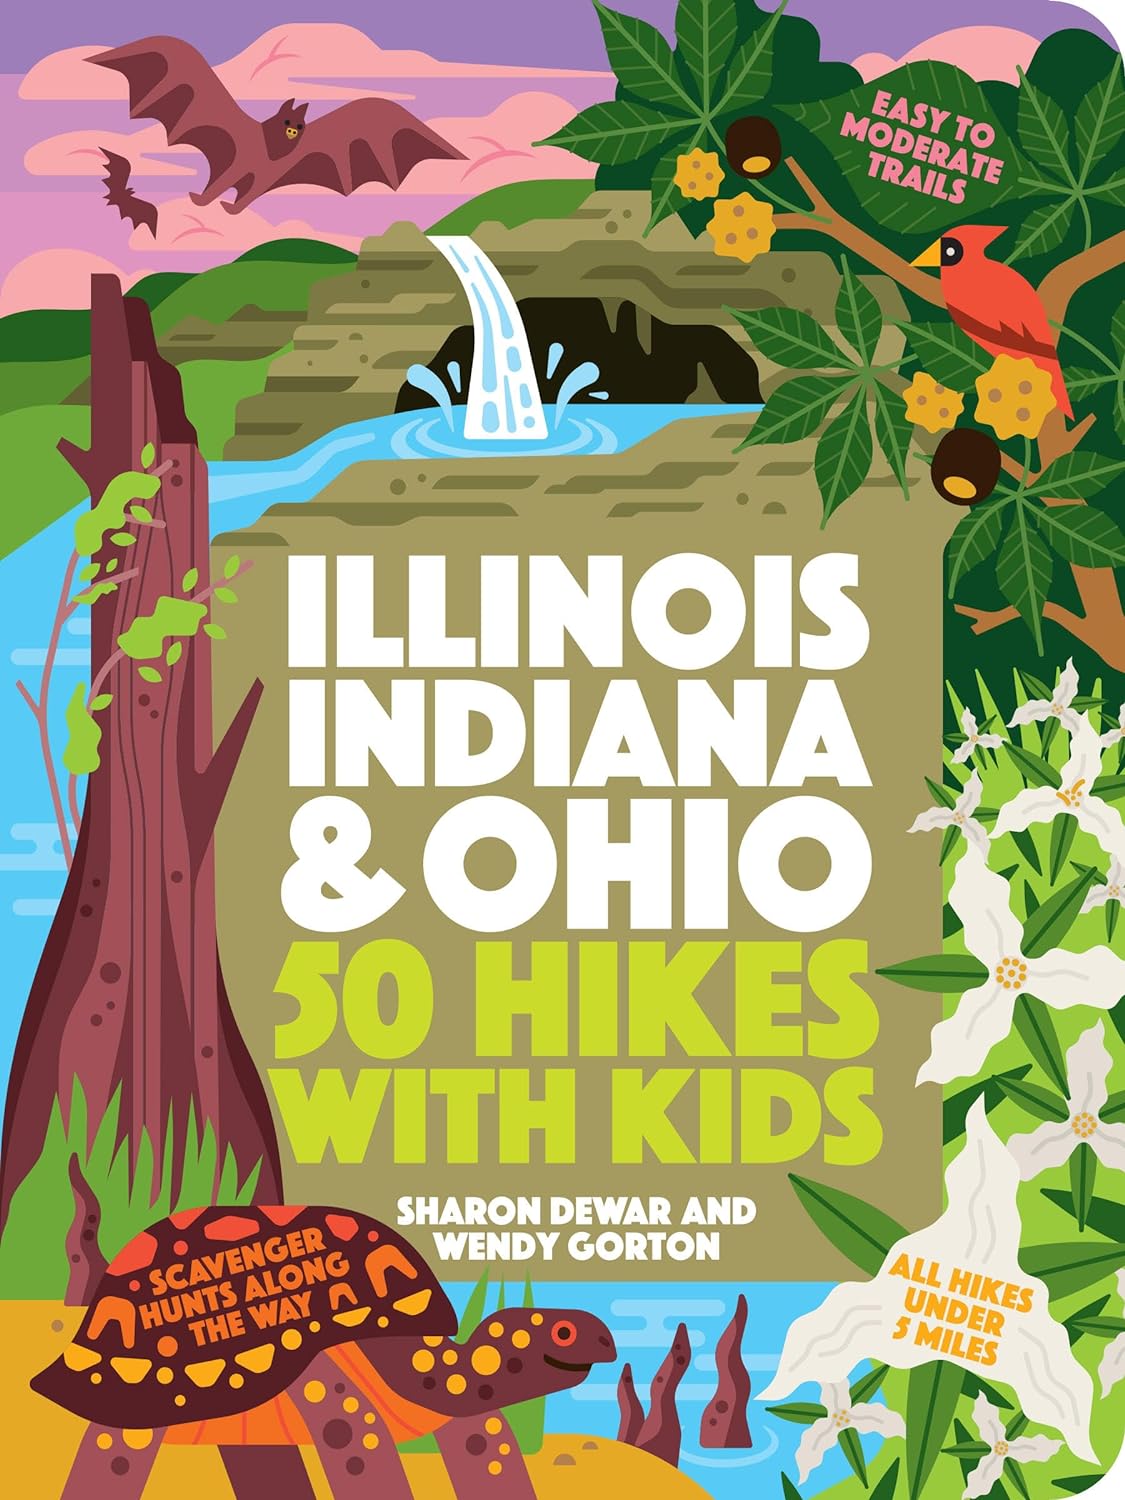 50 Hikes with Kids Illinois, Indiana, Ohio